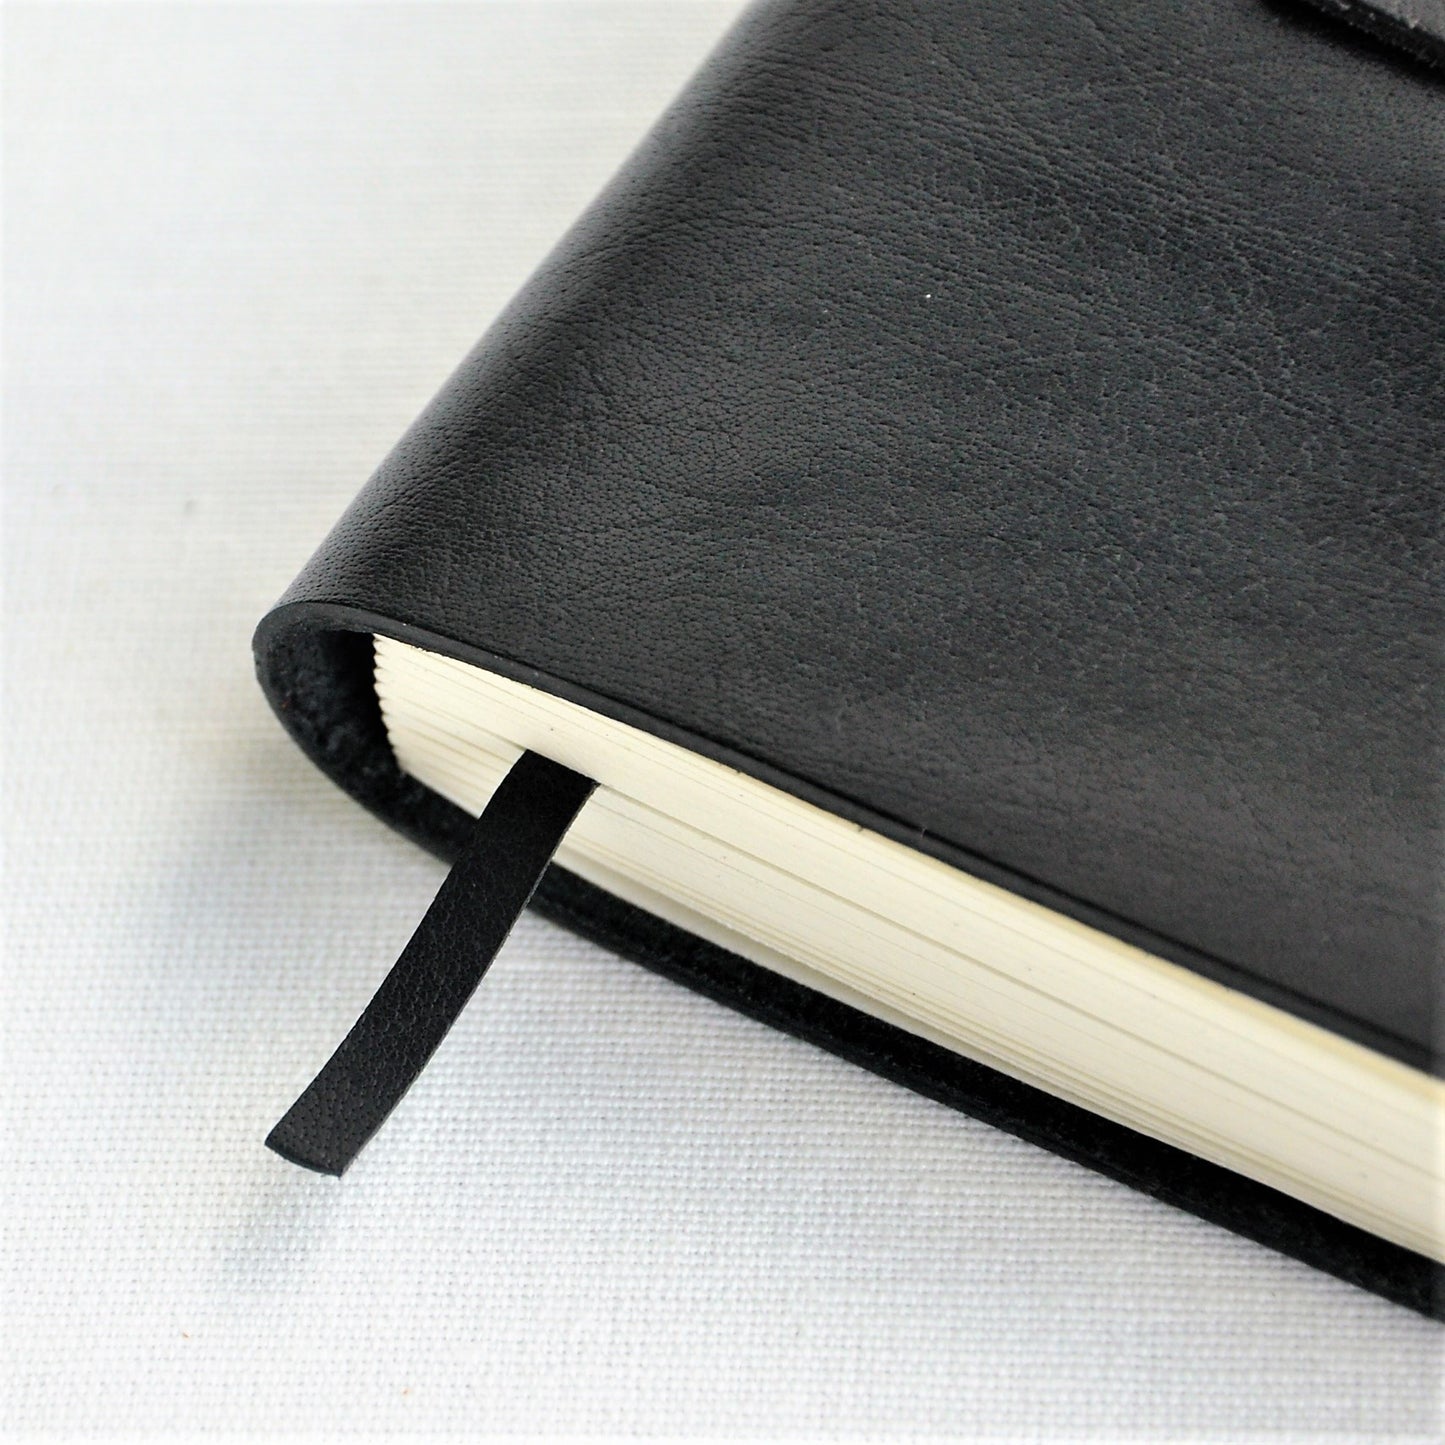 HERITAGE A6-P Leather Plain Designer's Journal